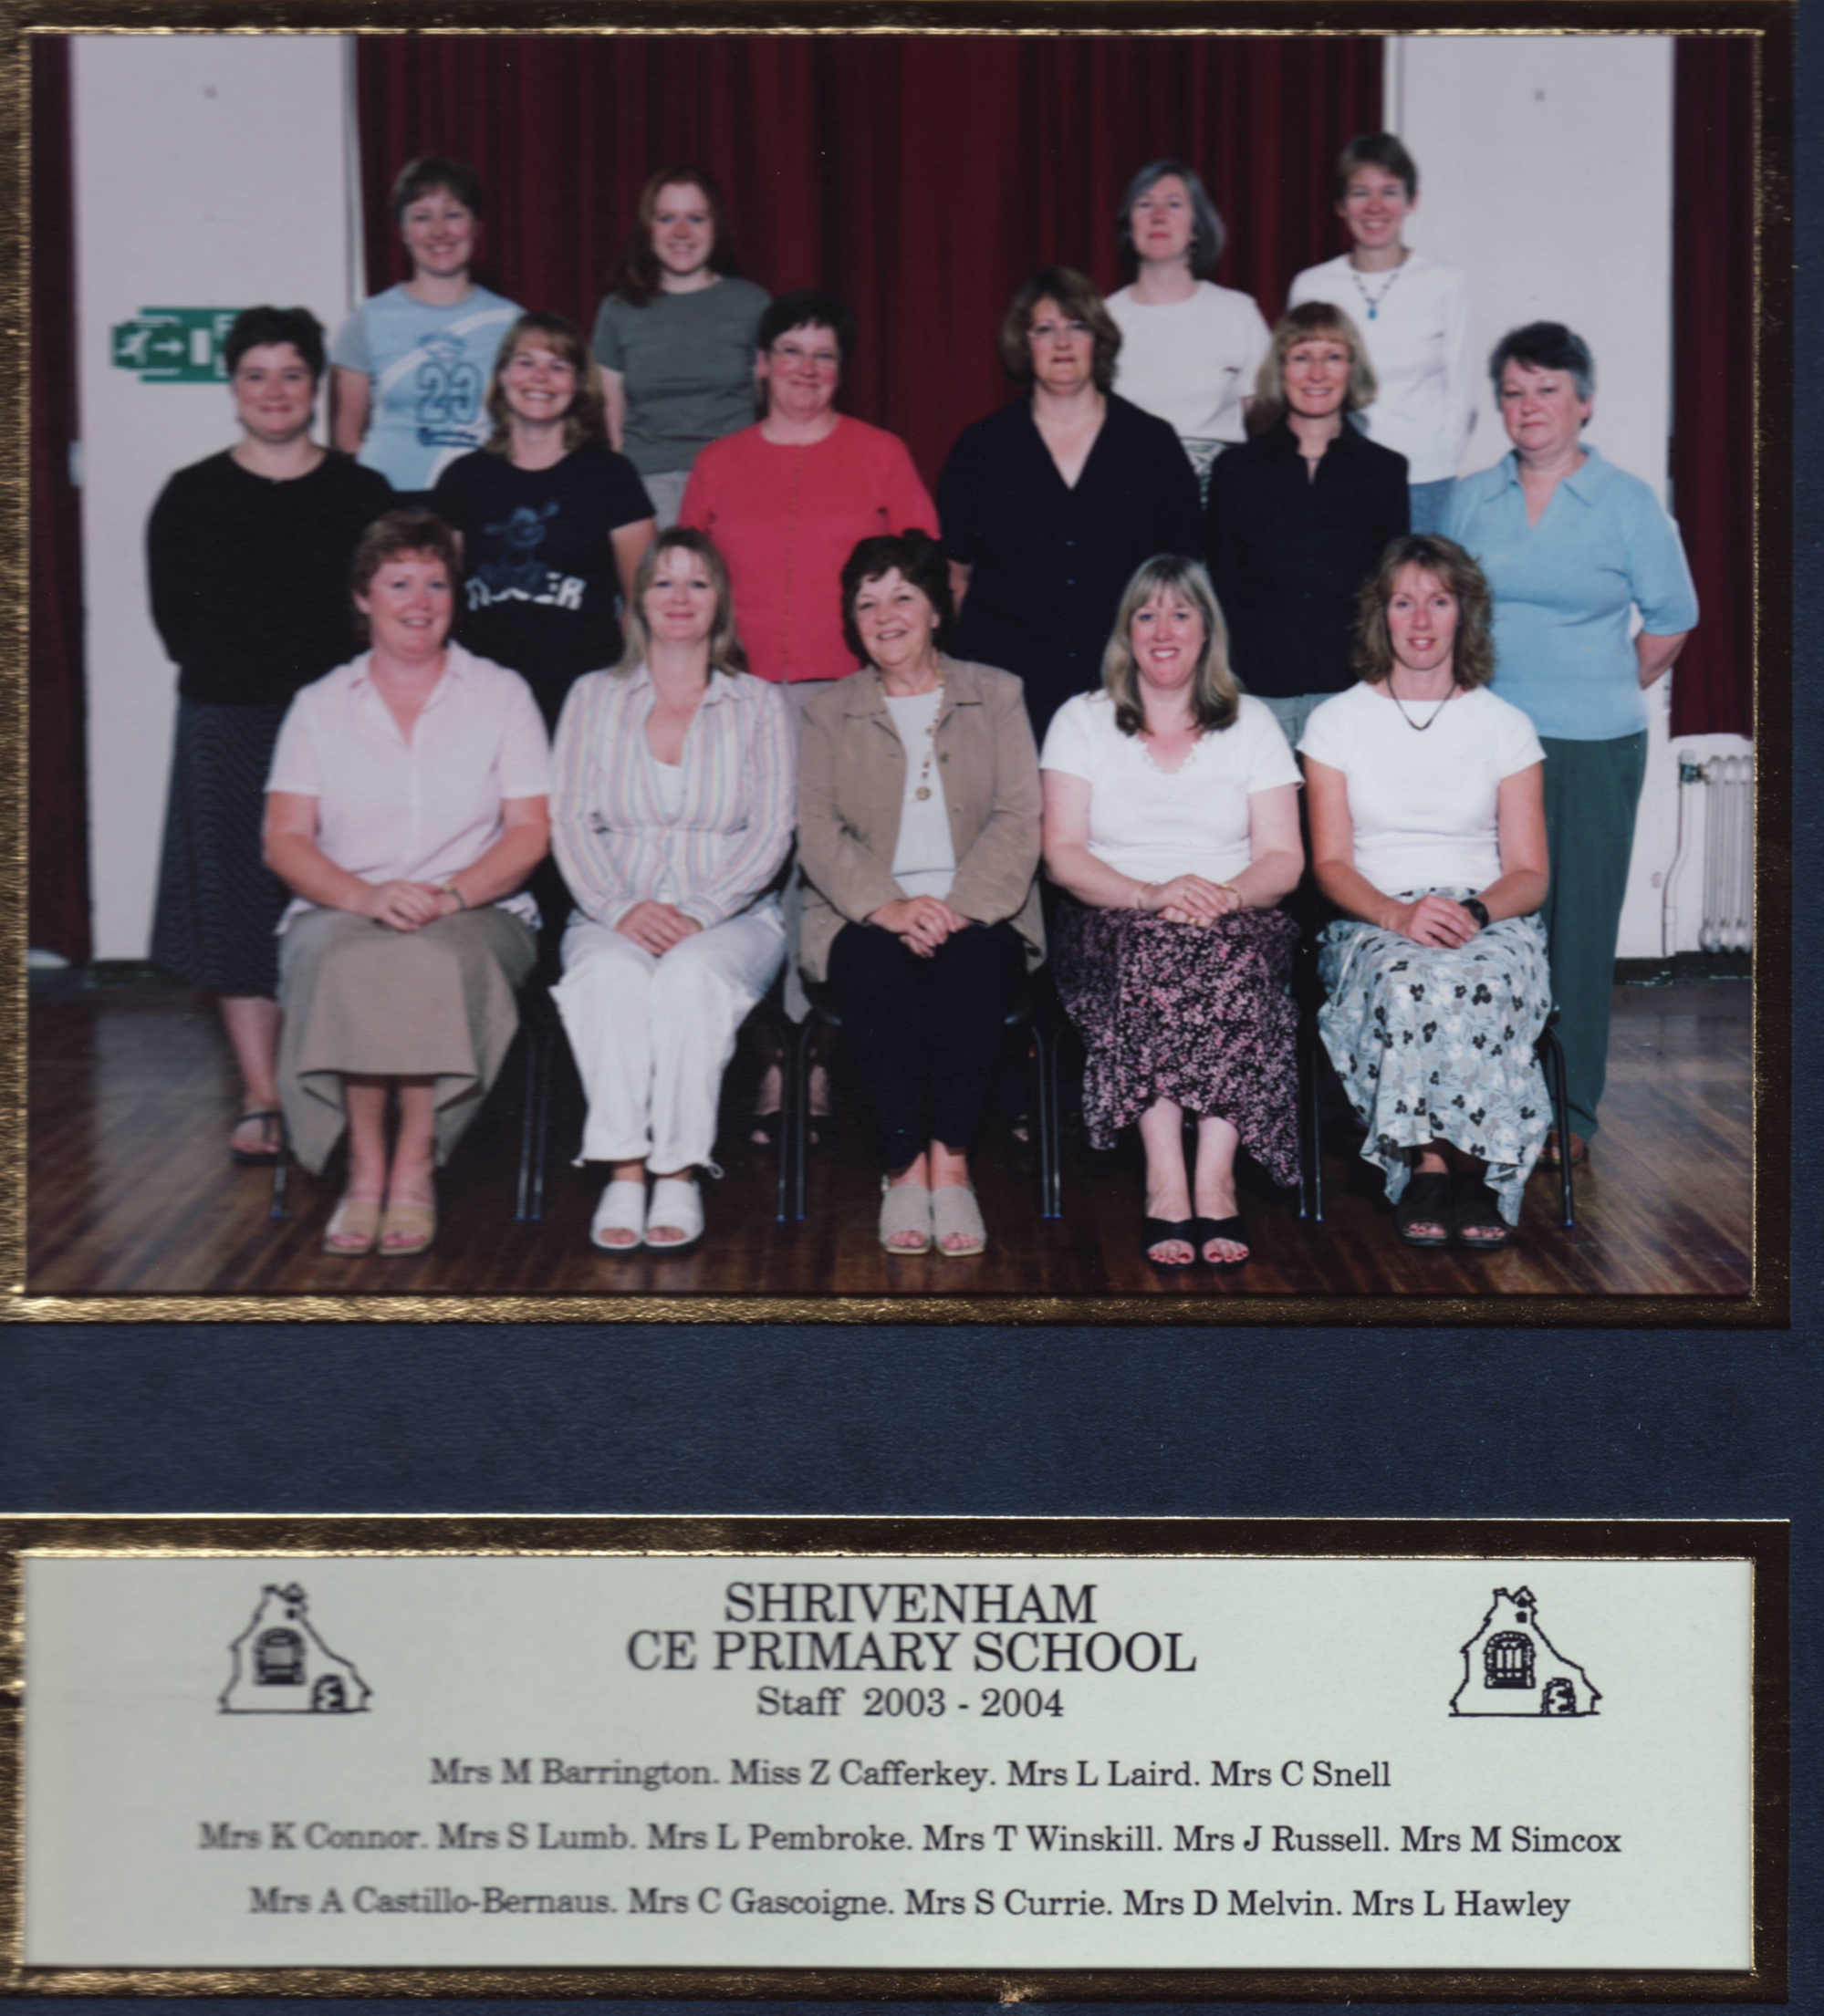 School staff of 2003 - 4